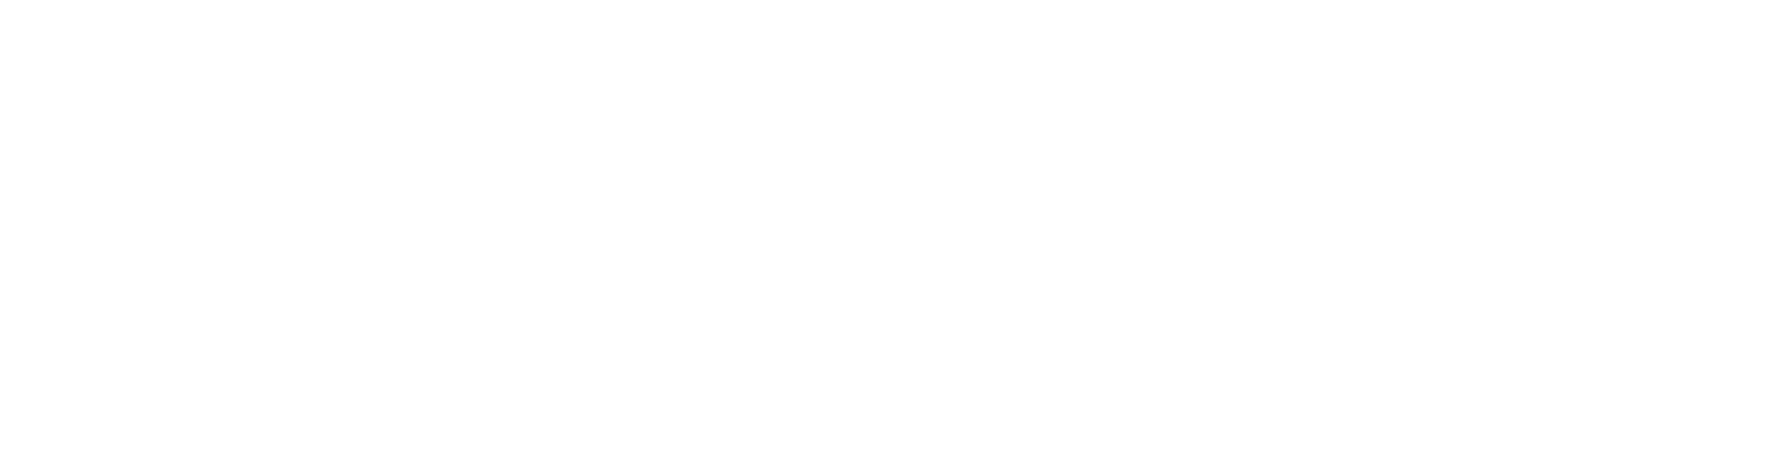 Iron + Total Iron-Binding Capacity Test